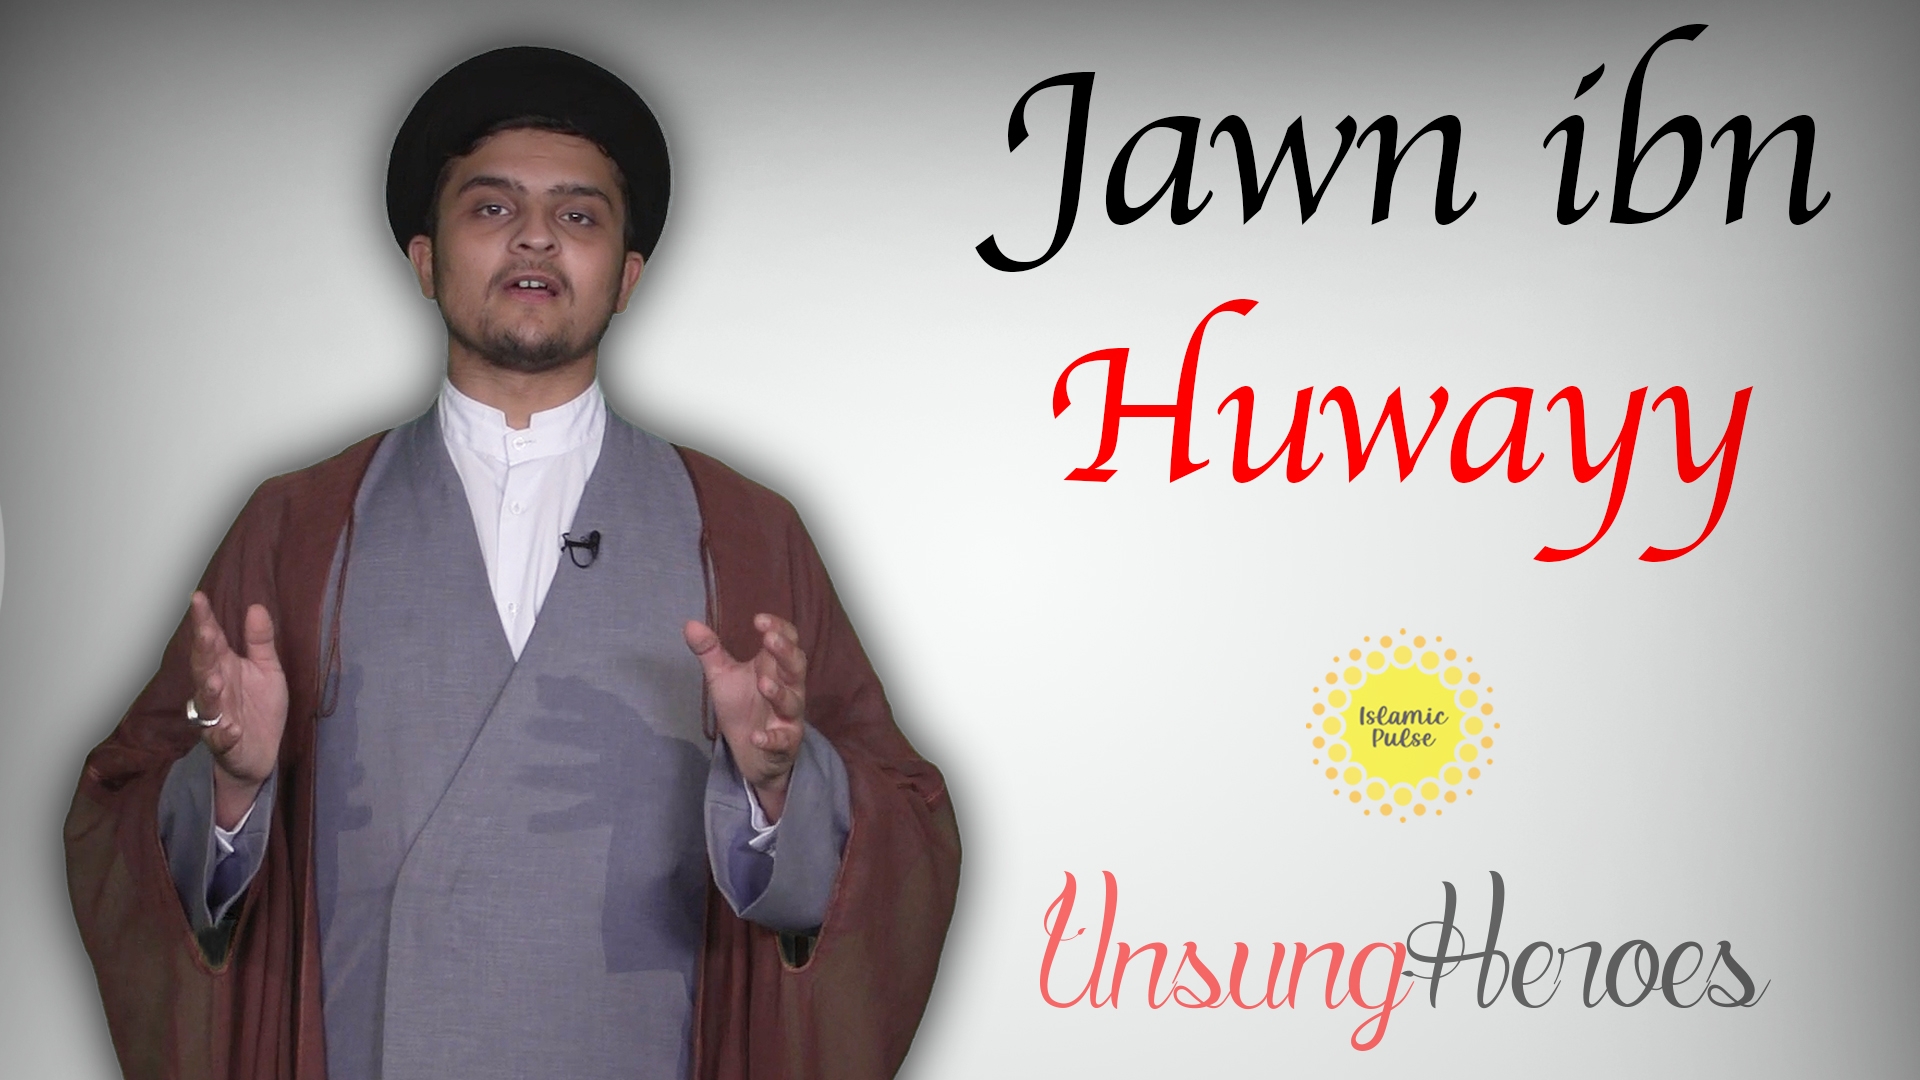 Jawn ibn Huwayy | Unsung Heroes | English